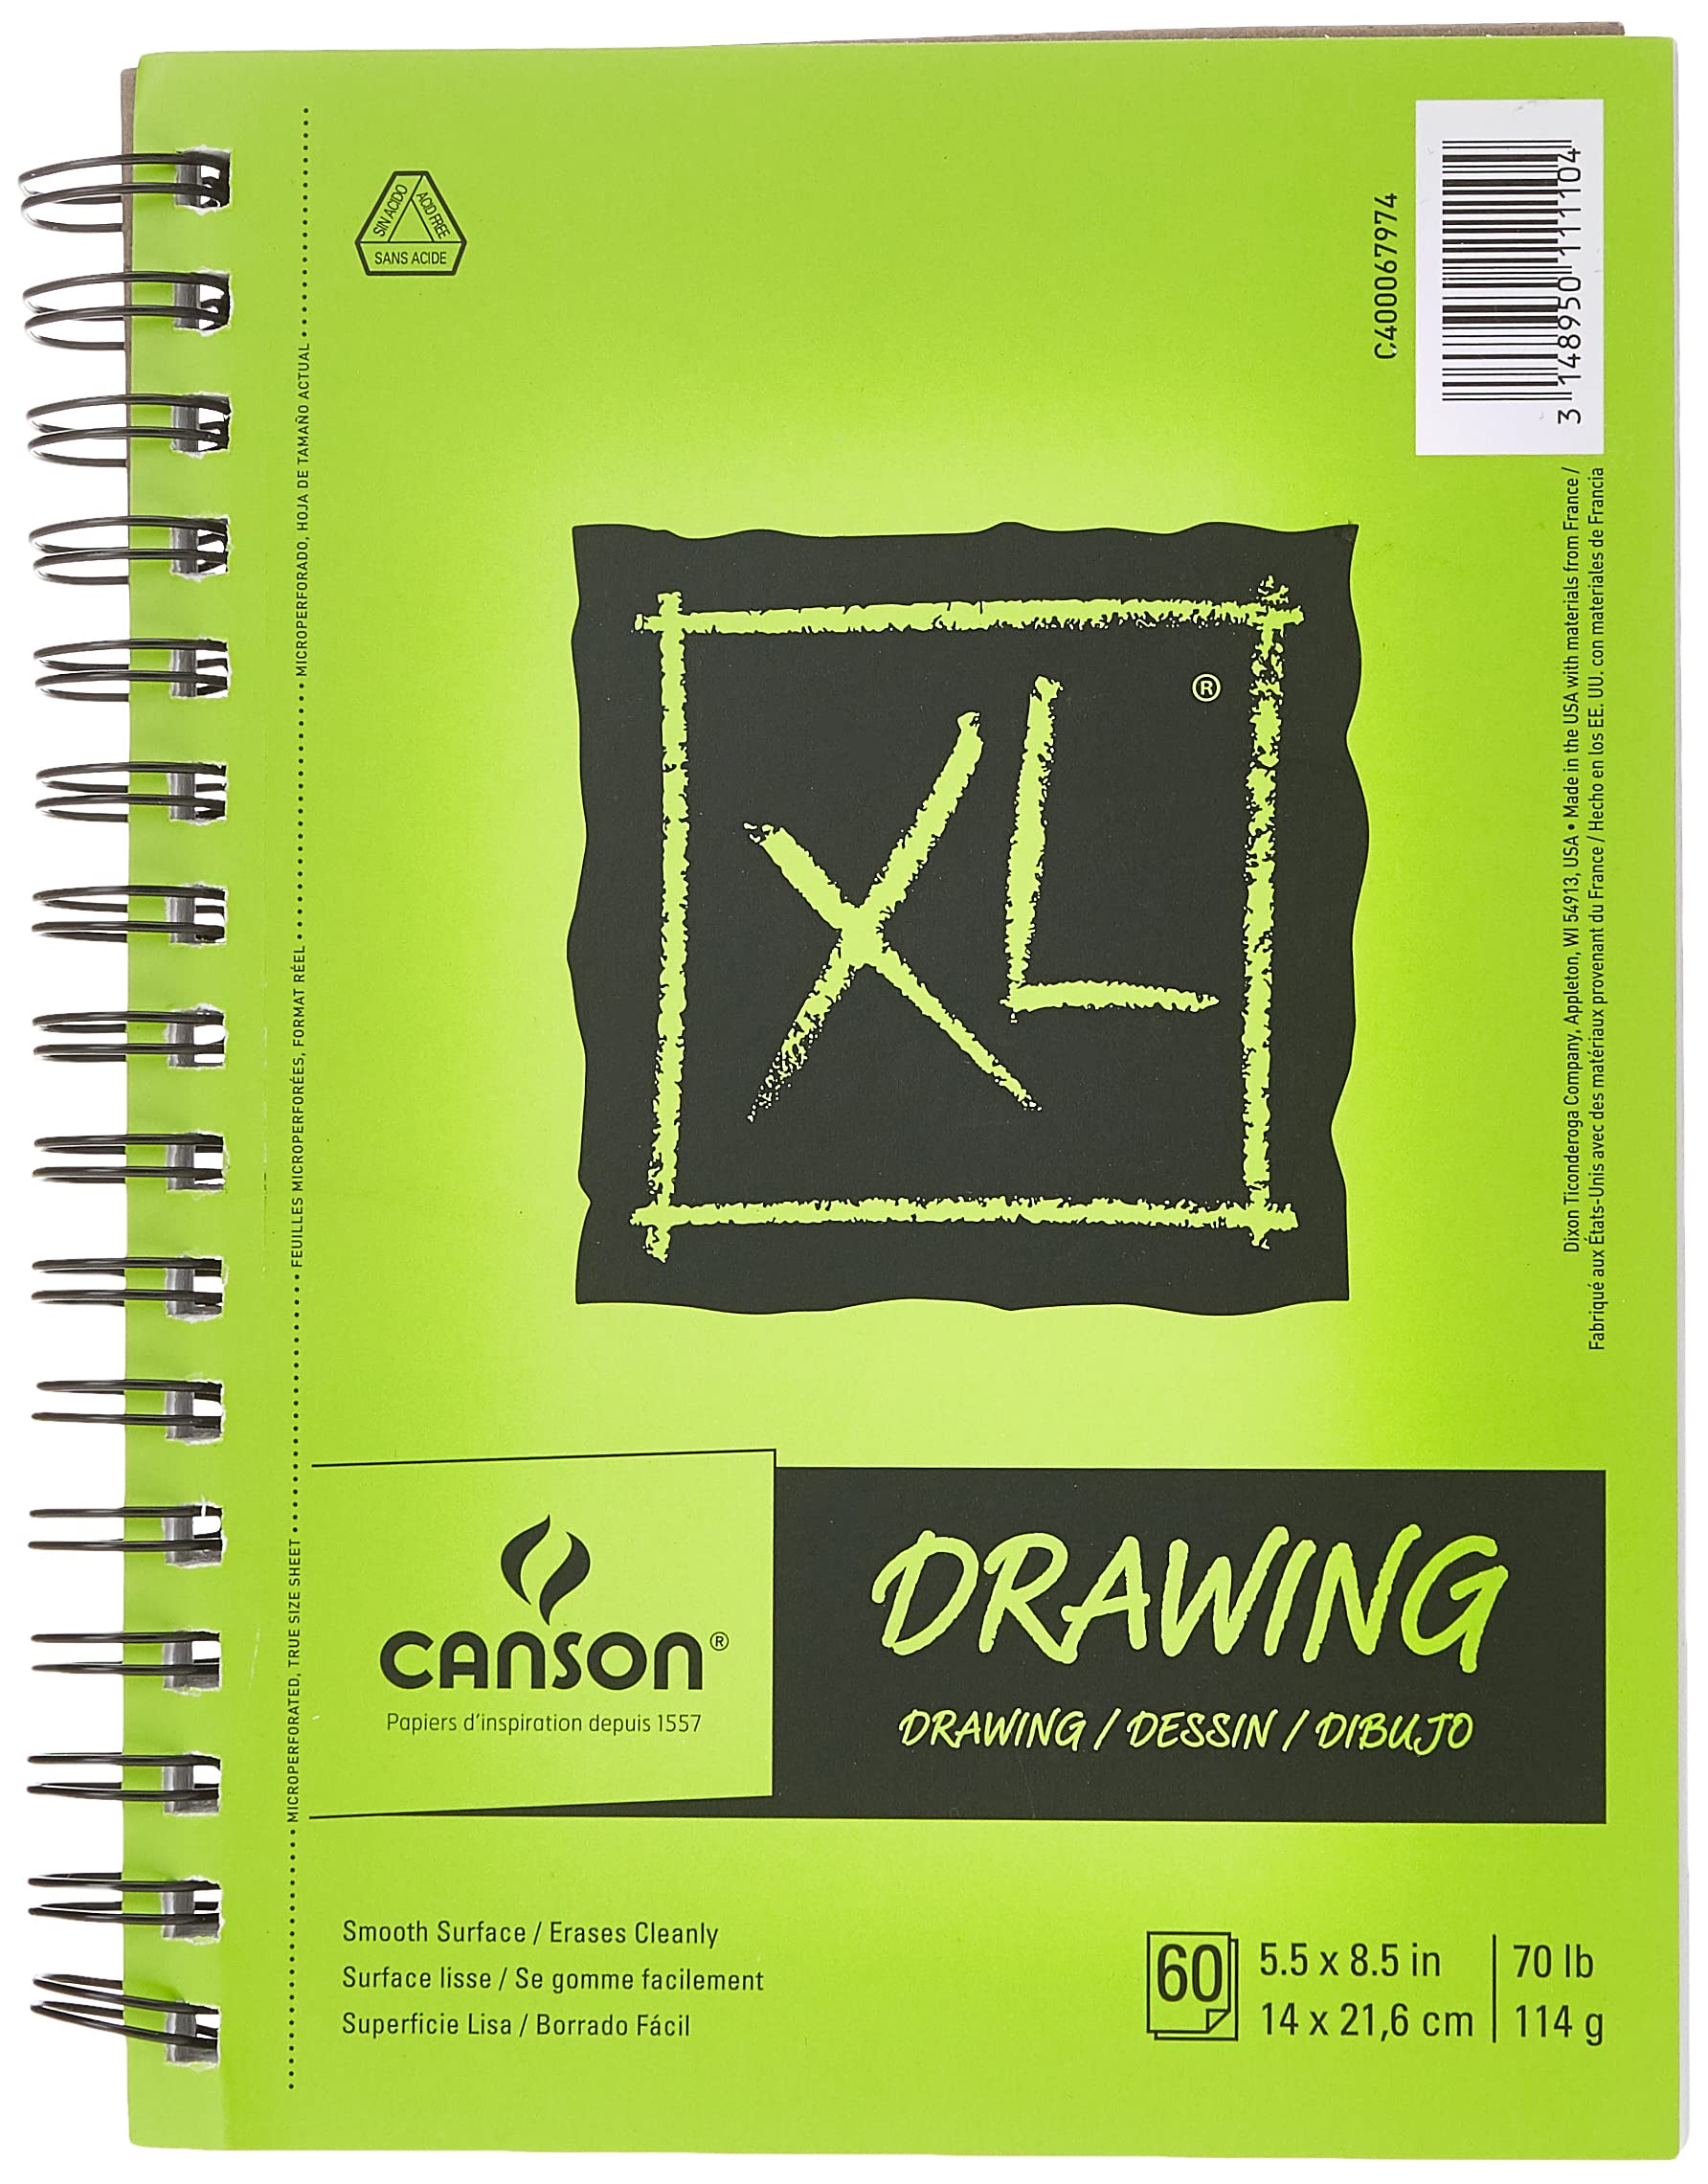 Canson - Mixed Media Art Book - 5.5 x 8.5